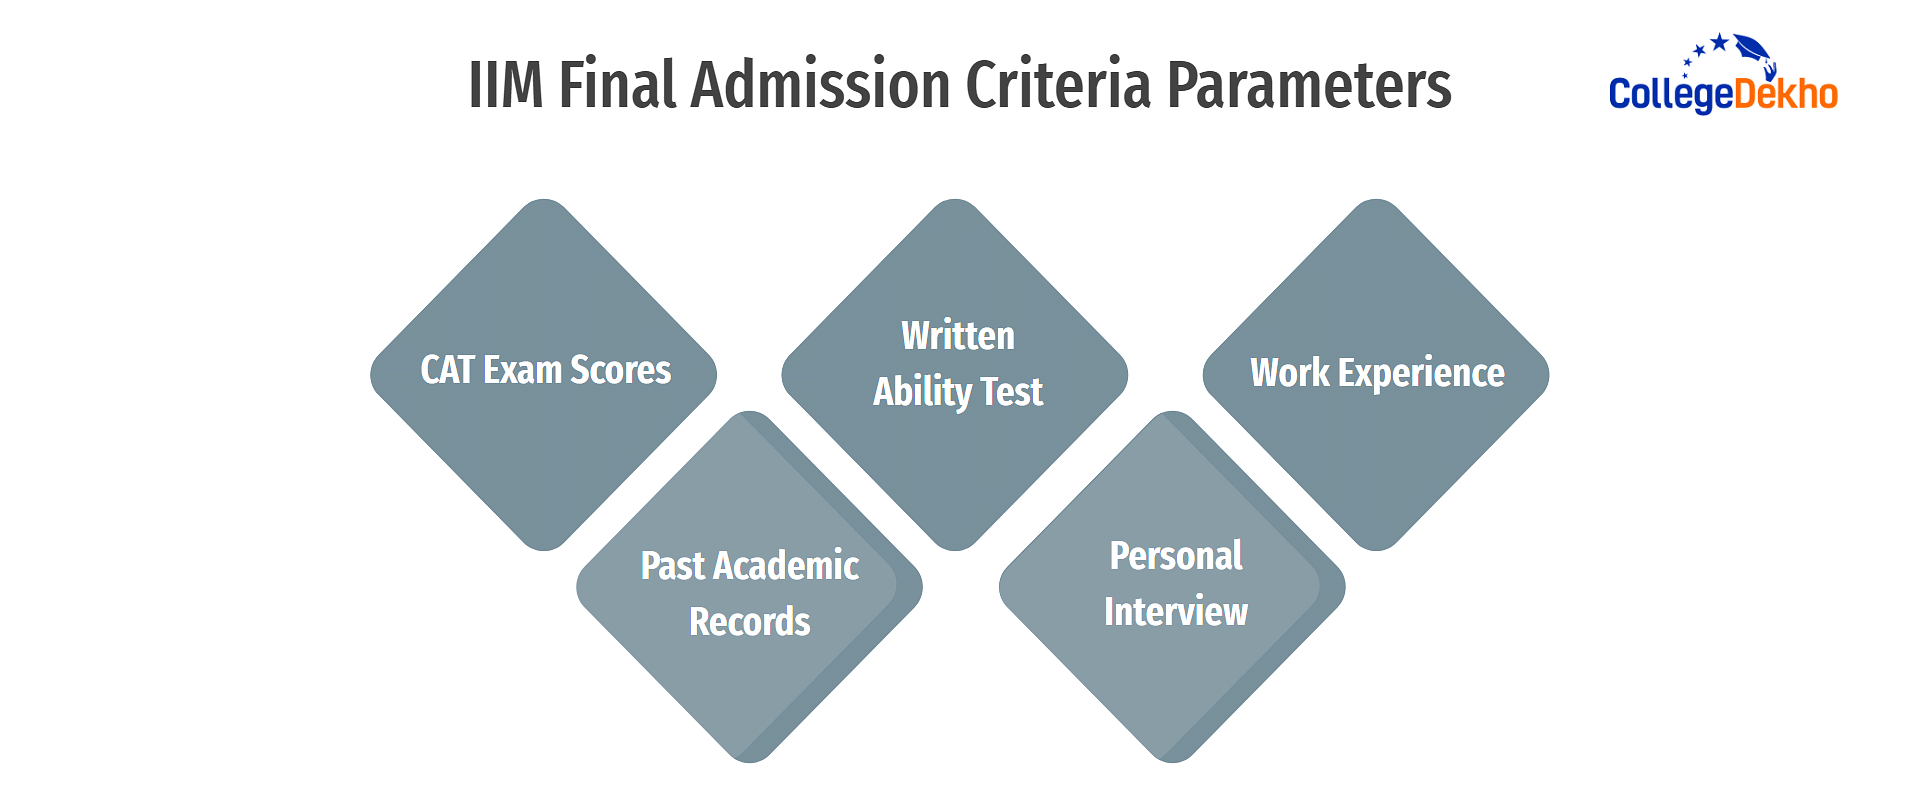 IIM Final Admission Criteria Parameters 